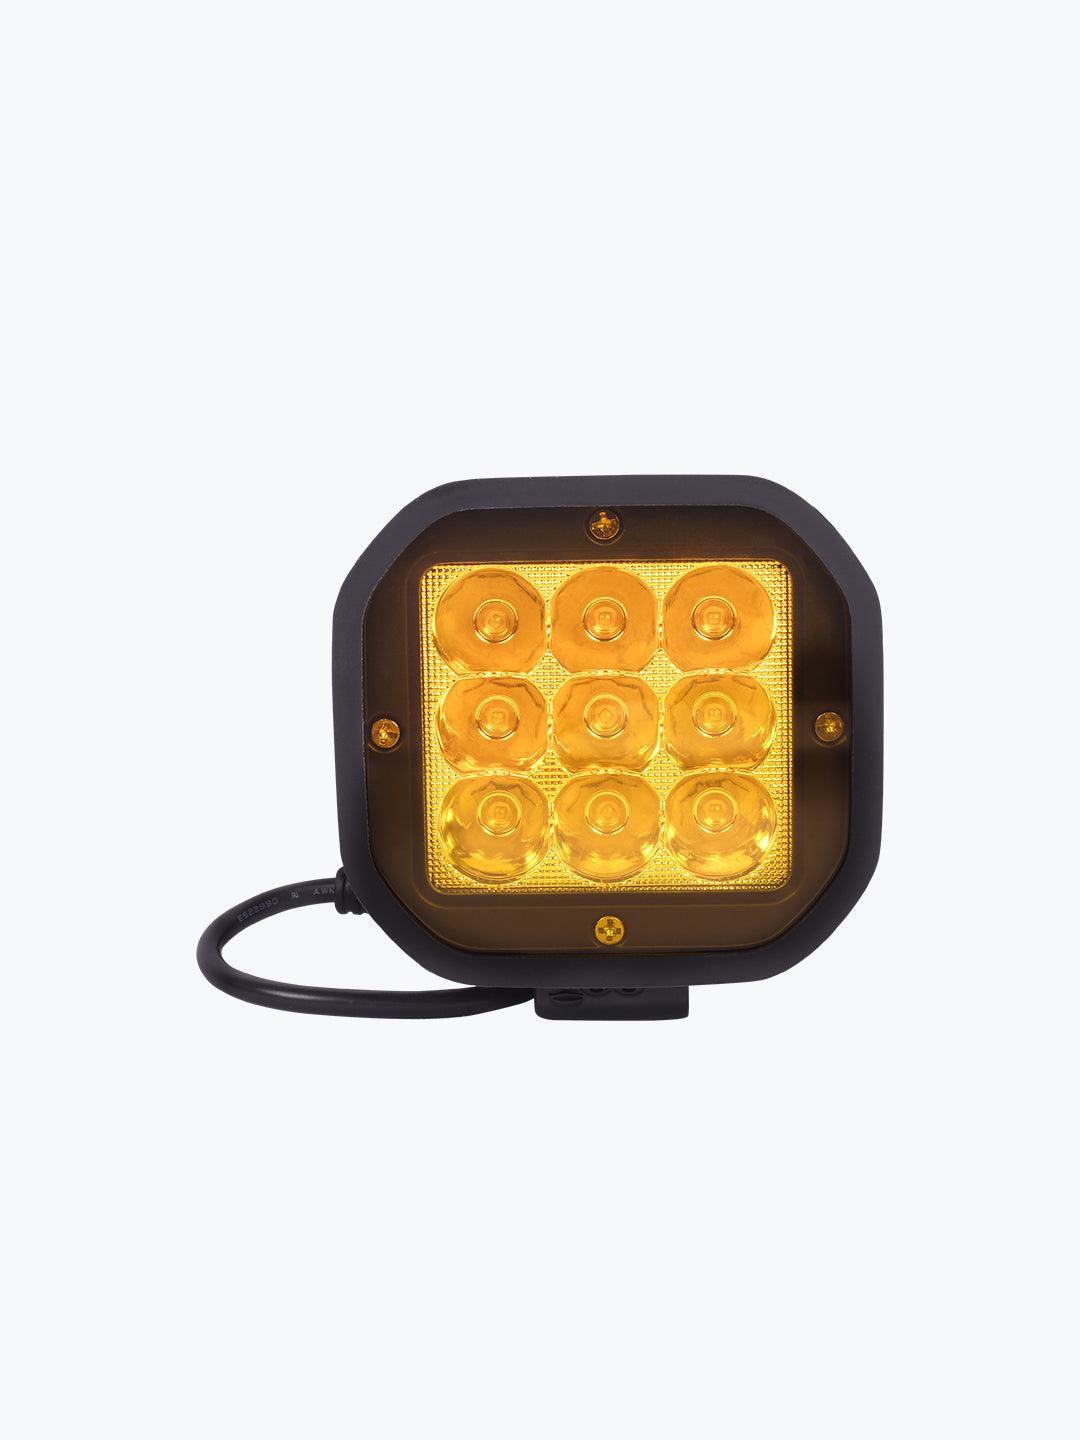 HJG 9 LED Fog Light With Yellow Cap Premium - Moto Modz